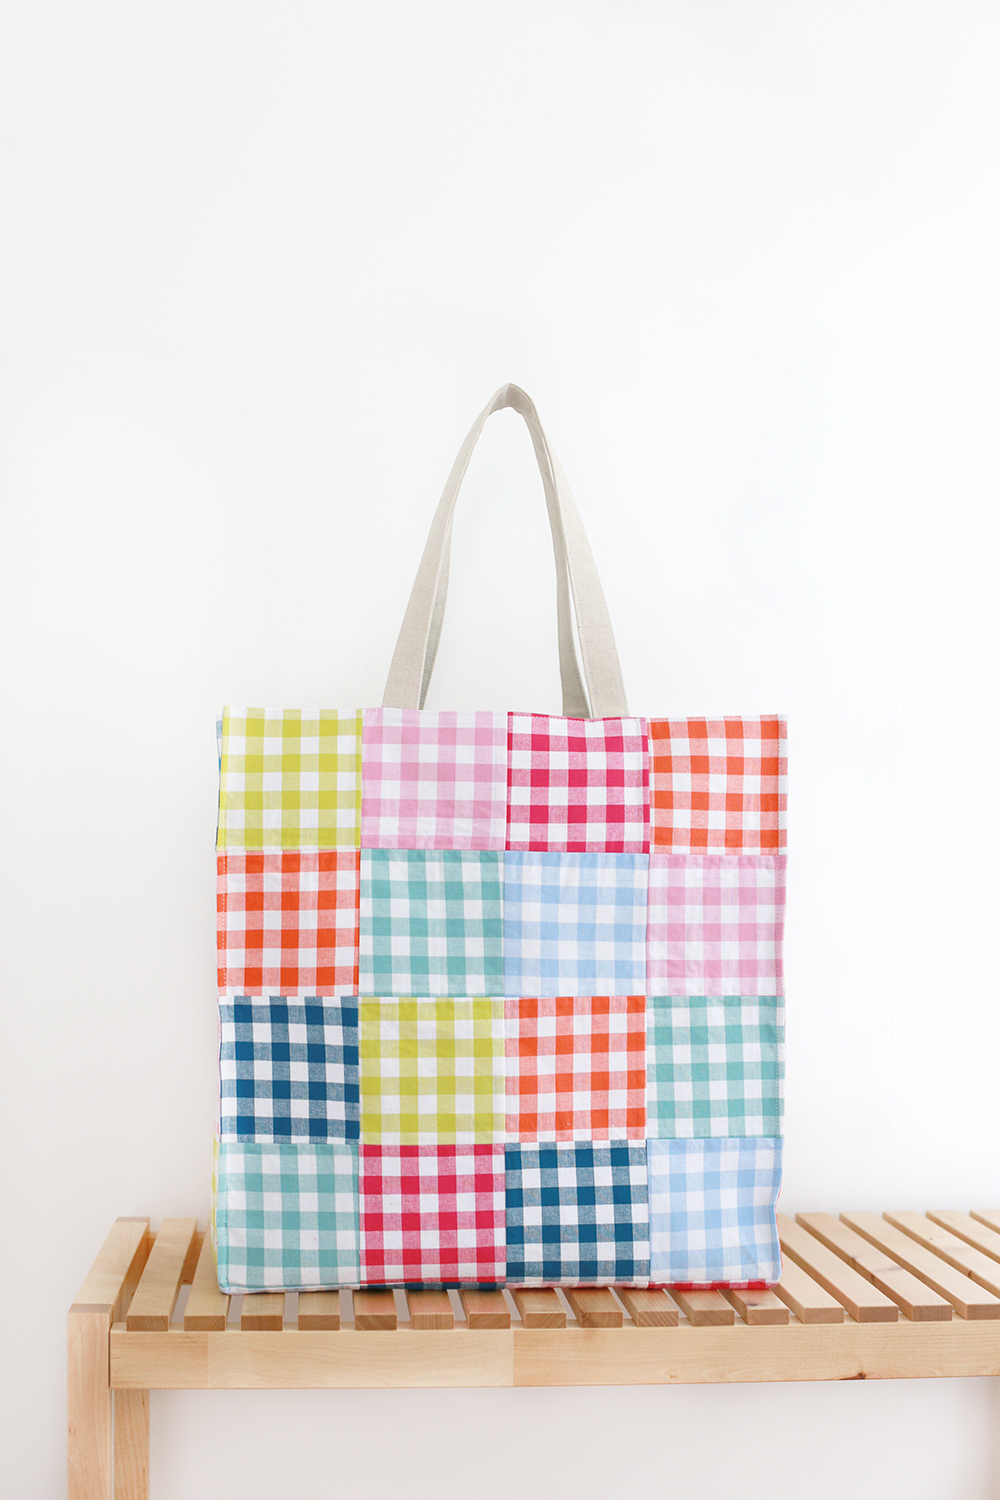 DIY DOUBLE ZIPPER SHOULDER BAG / tote bag / sewing tutorial